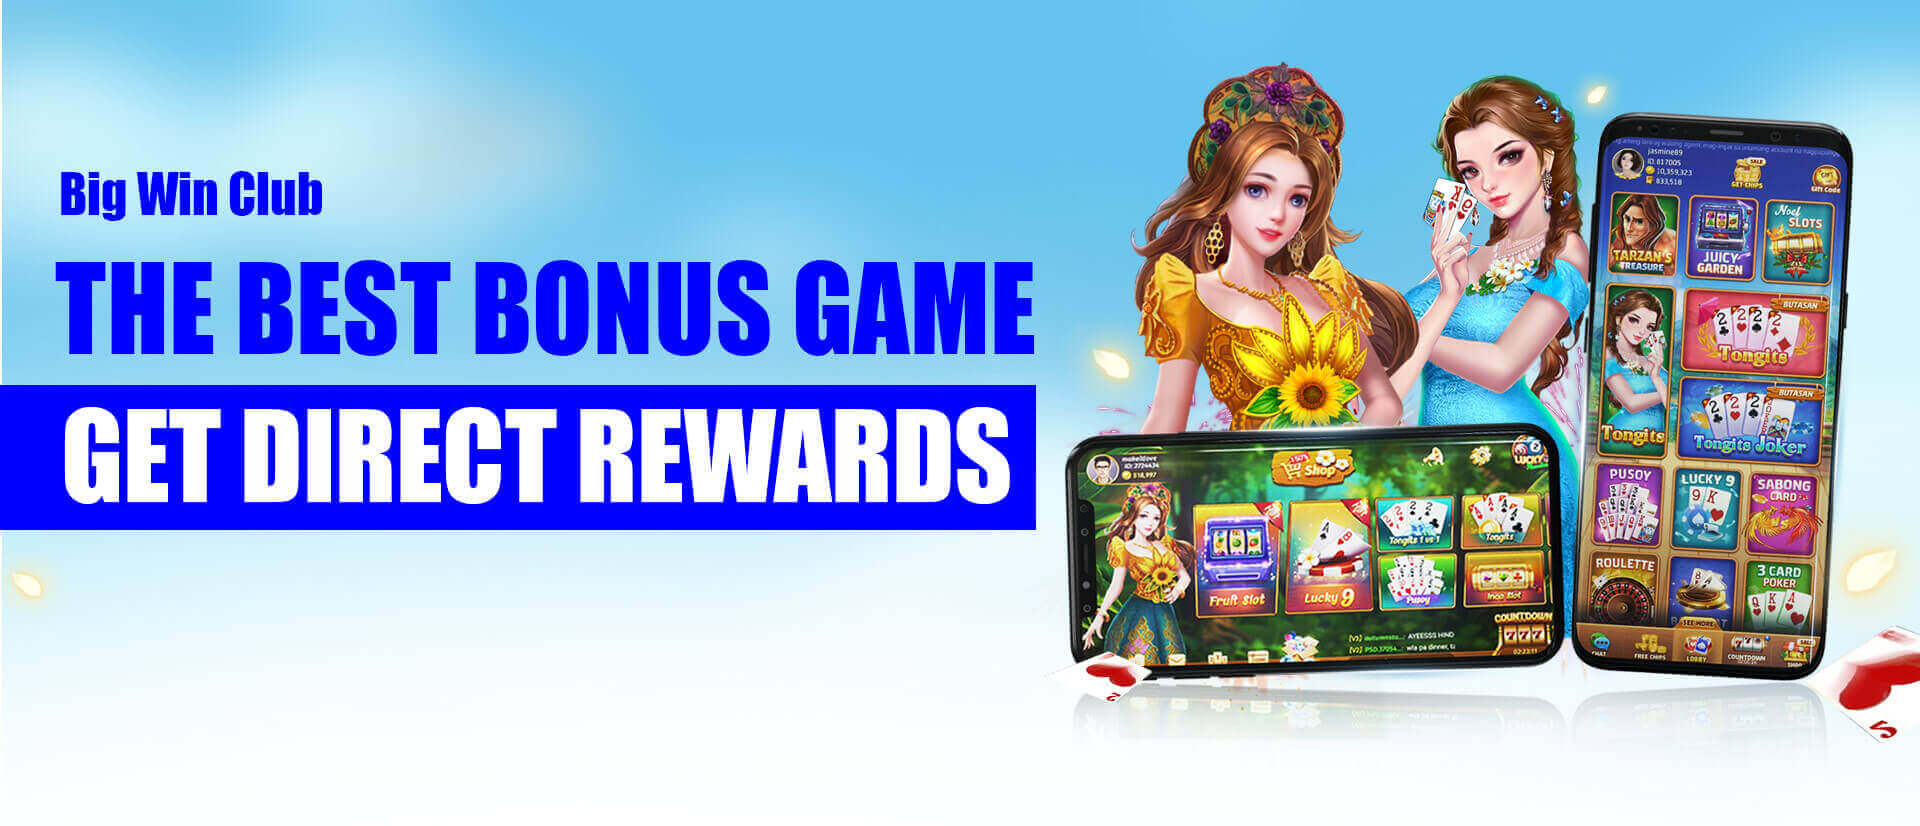 Big win club - The best bonus game, get direct rewards